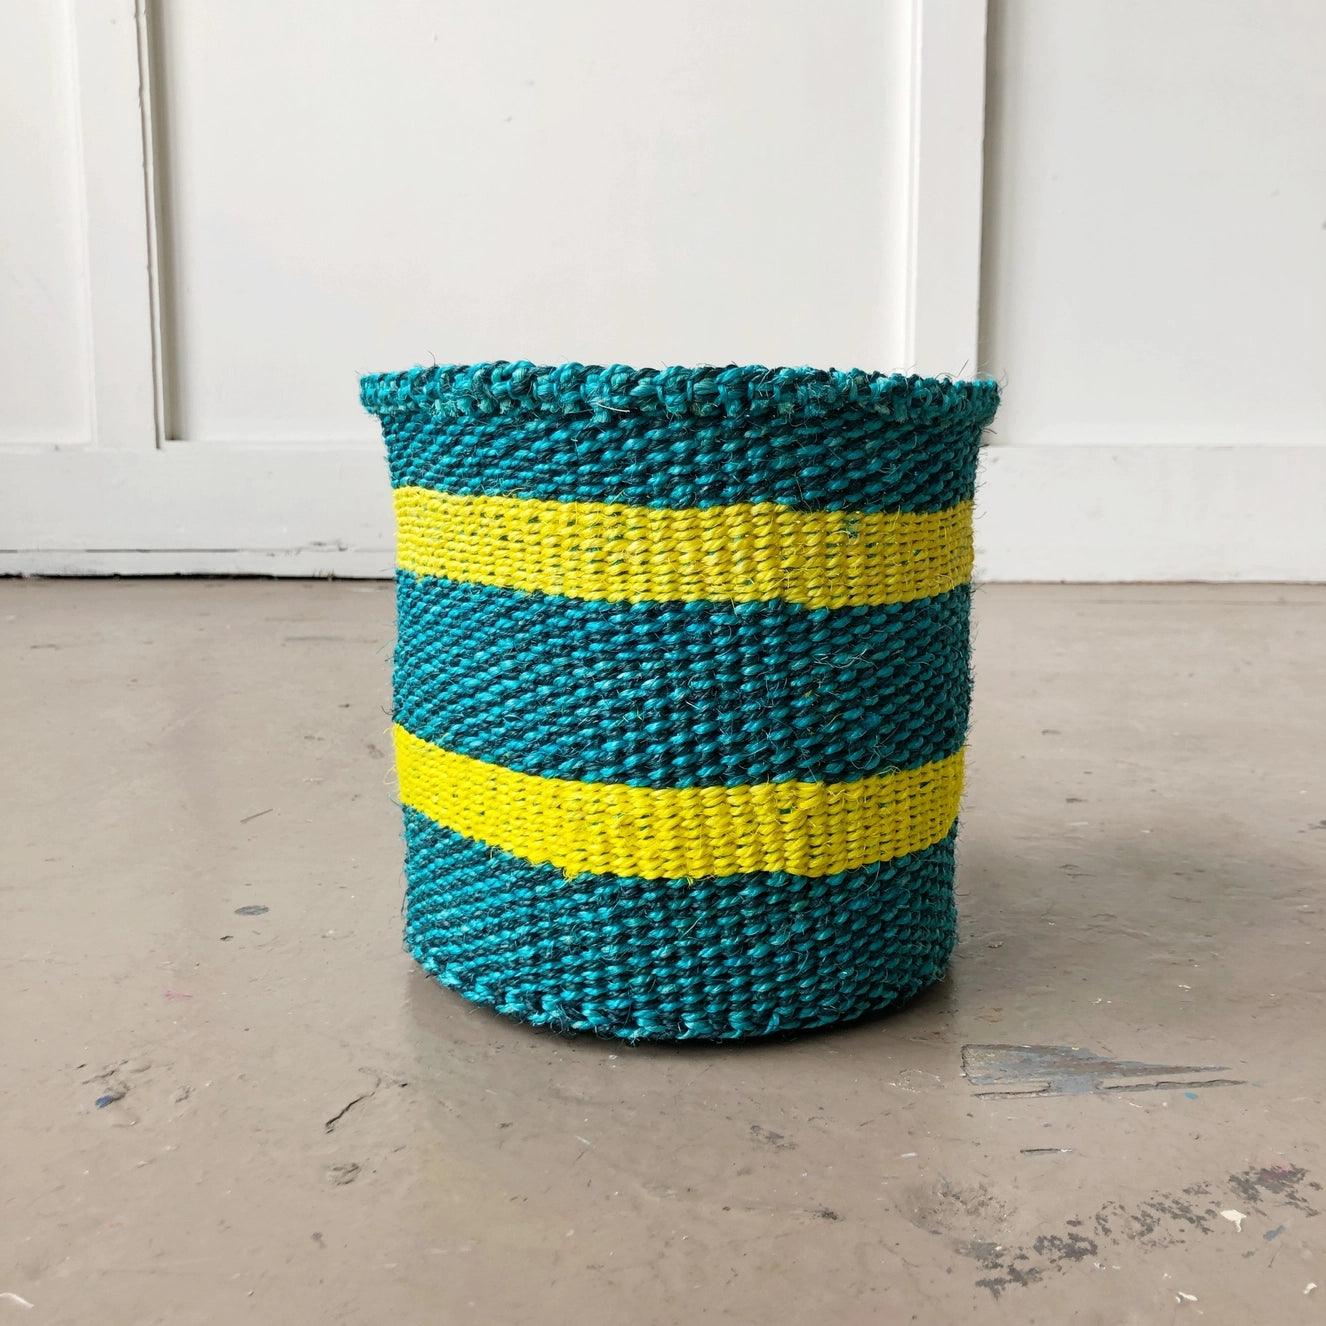 Storage Plant Basket - Turquoise Dreams